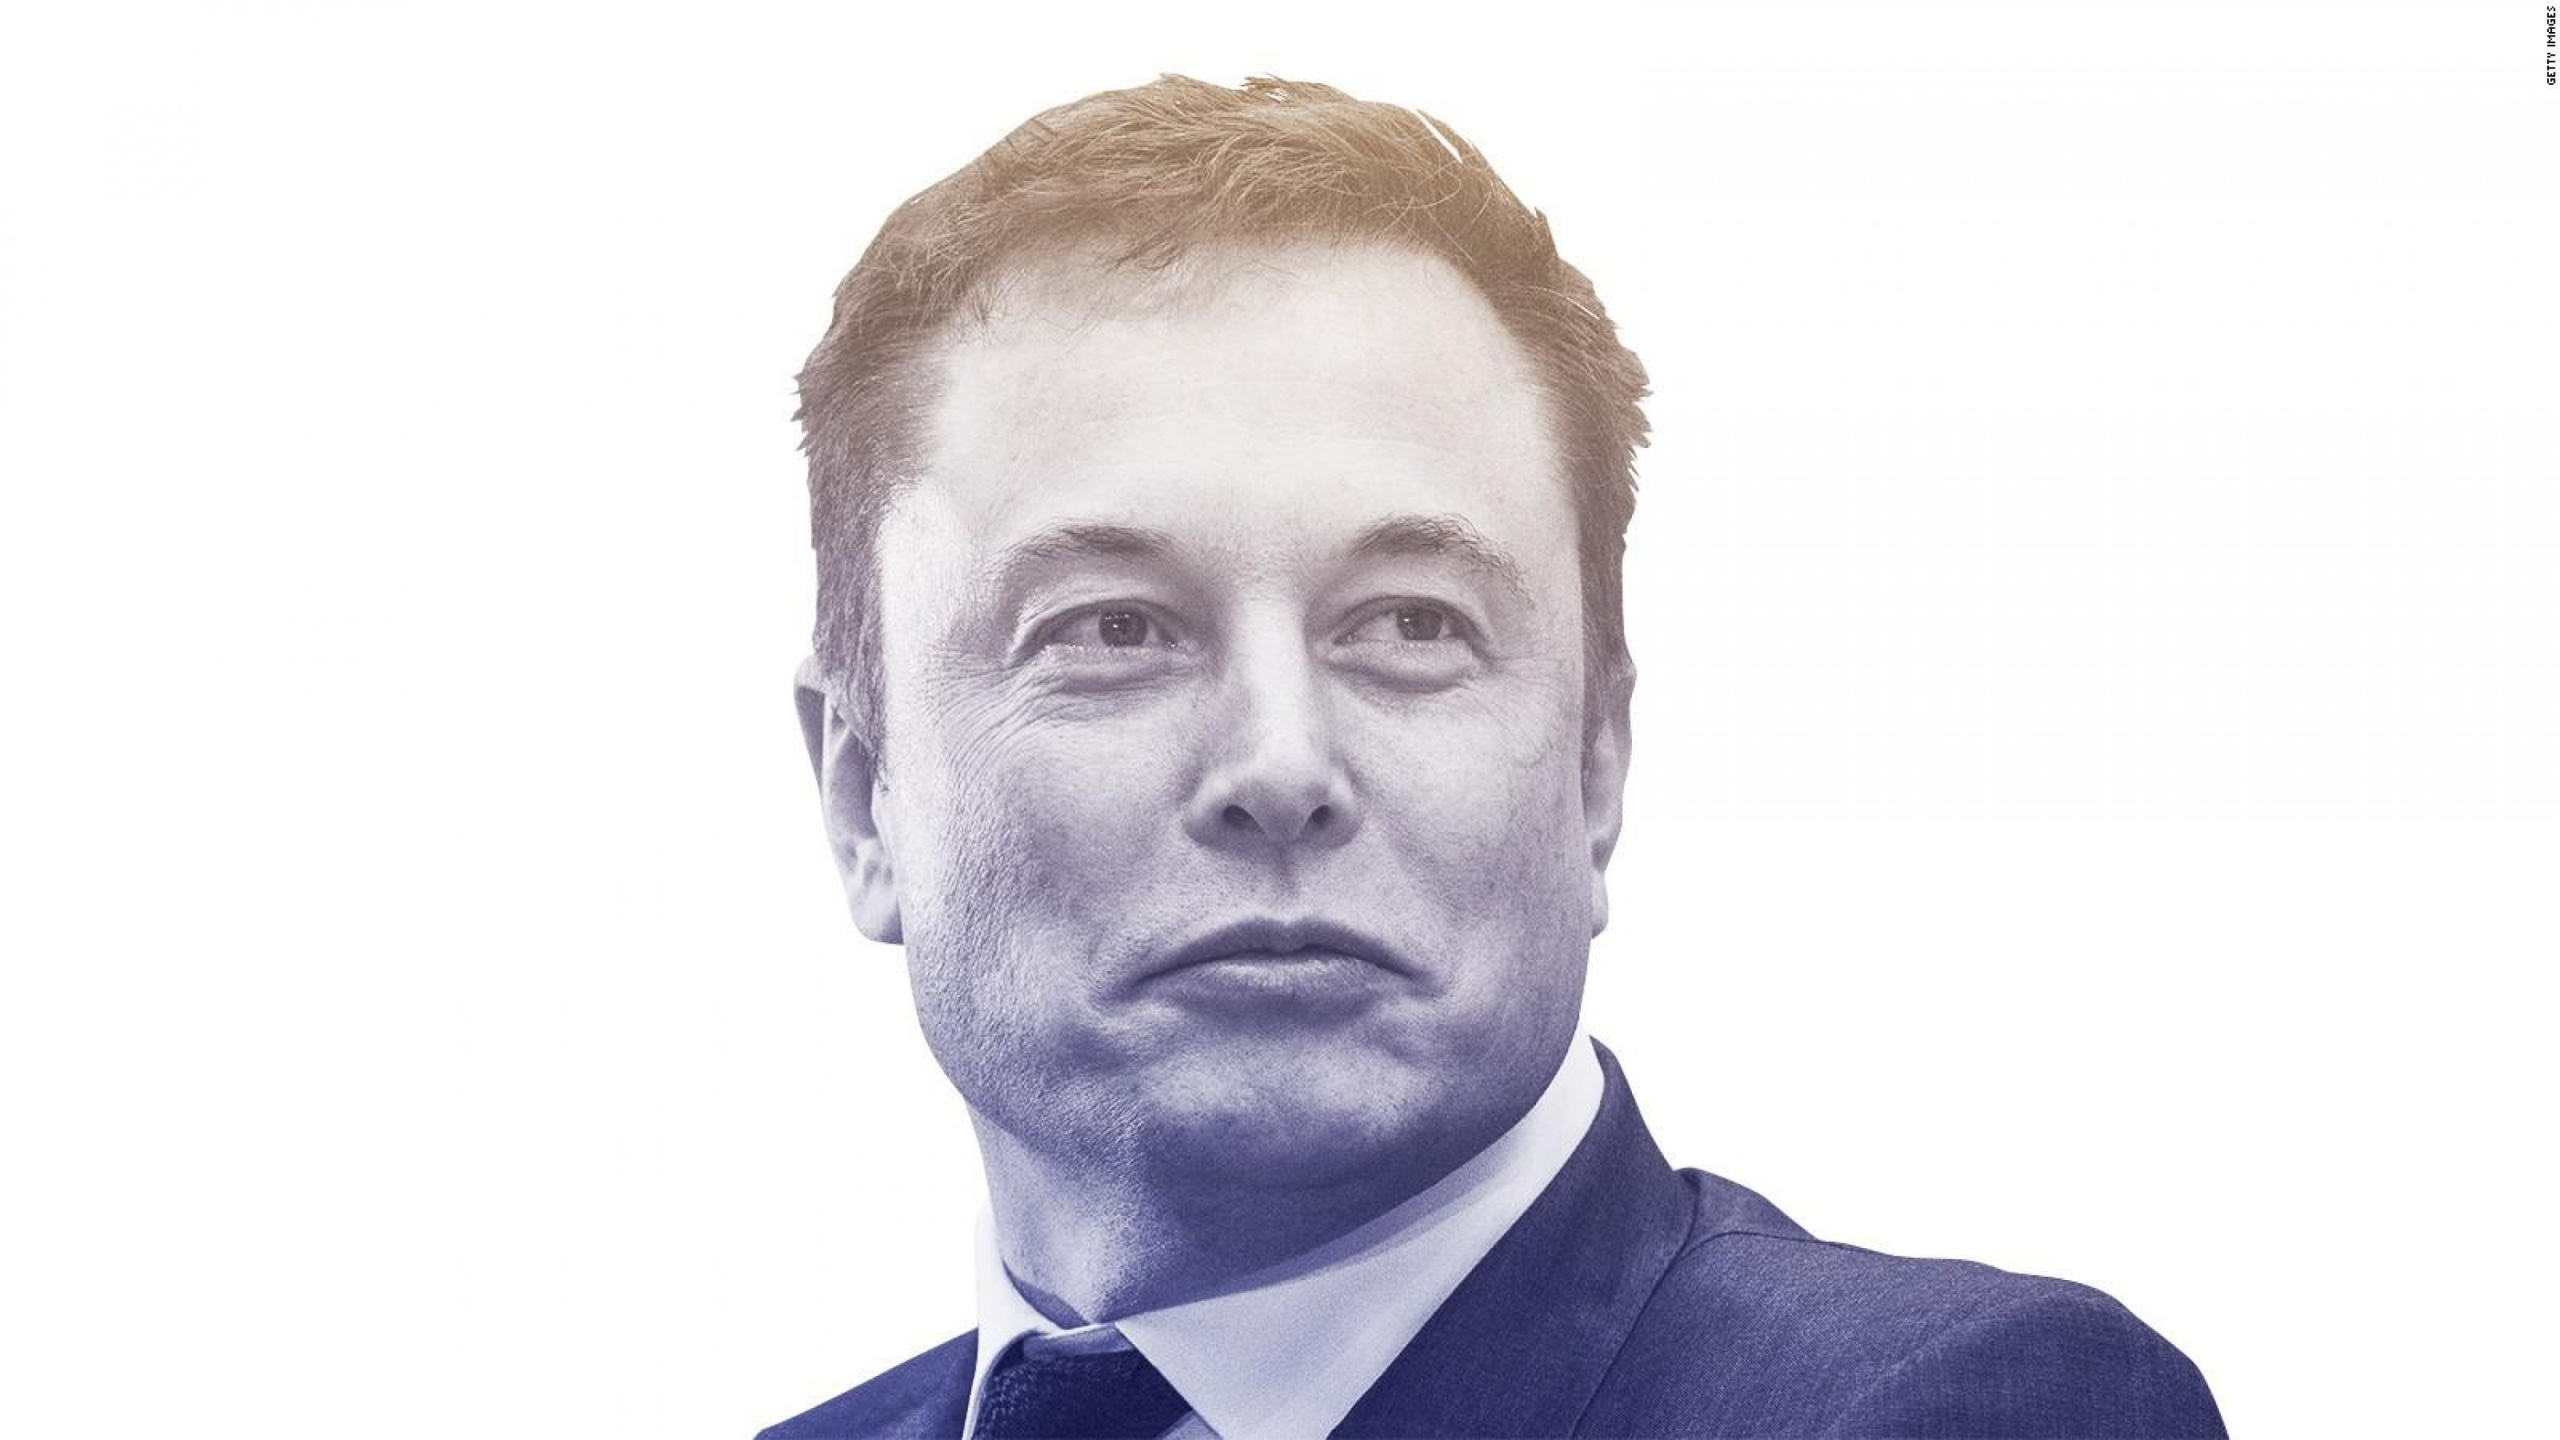 Elon Musk, Face, Head, Chin, Forehead. Wallpaper in 2560x1440 Resolution